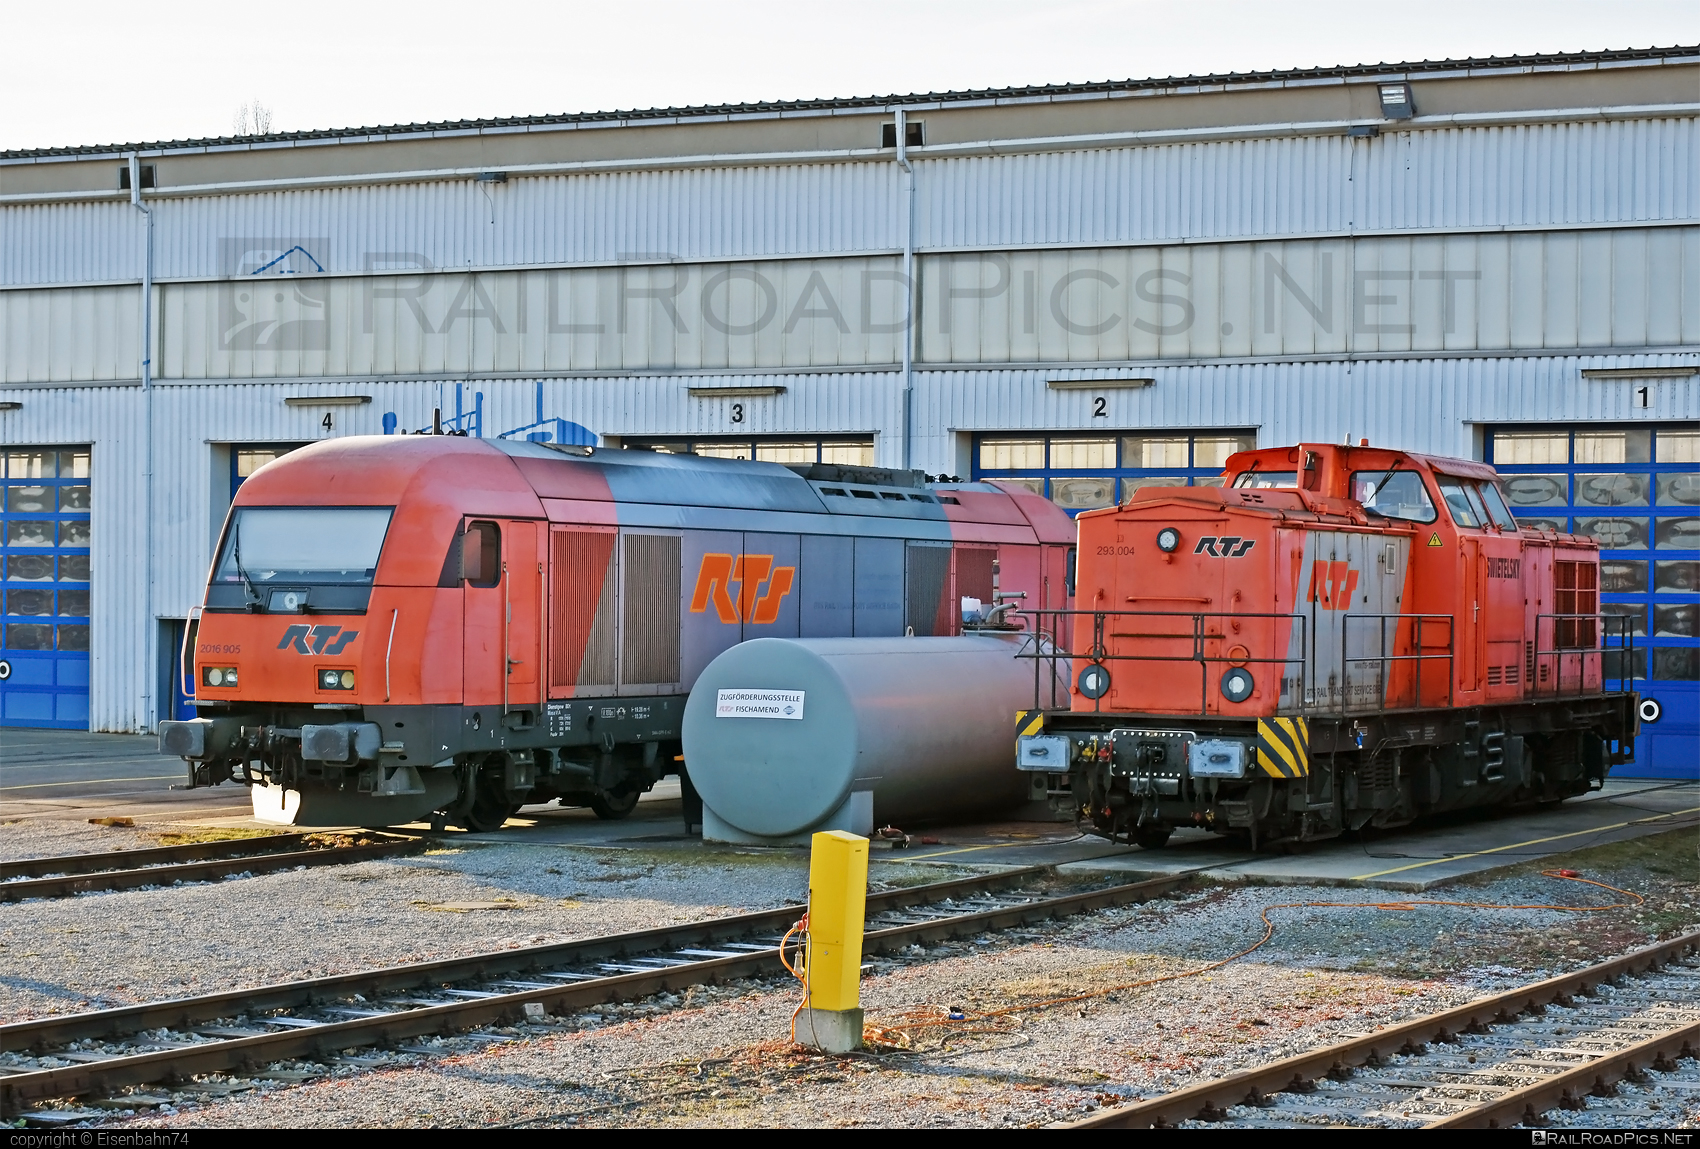 Siemens ER20 - 2016 905 operated by RTS Rail Transport Service GmbH #er20 #er20hercules #eurorunner #railtransportservicegmbh #rts #rtsrailtransportservice #siemens #siemenser20 #siemenser20hercules #siemenseurorunner #siemenshercules #swietelsky